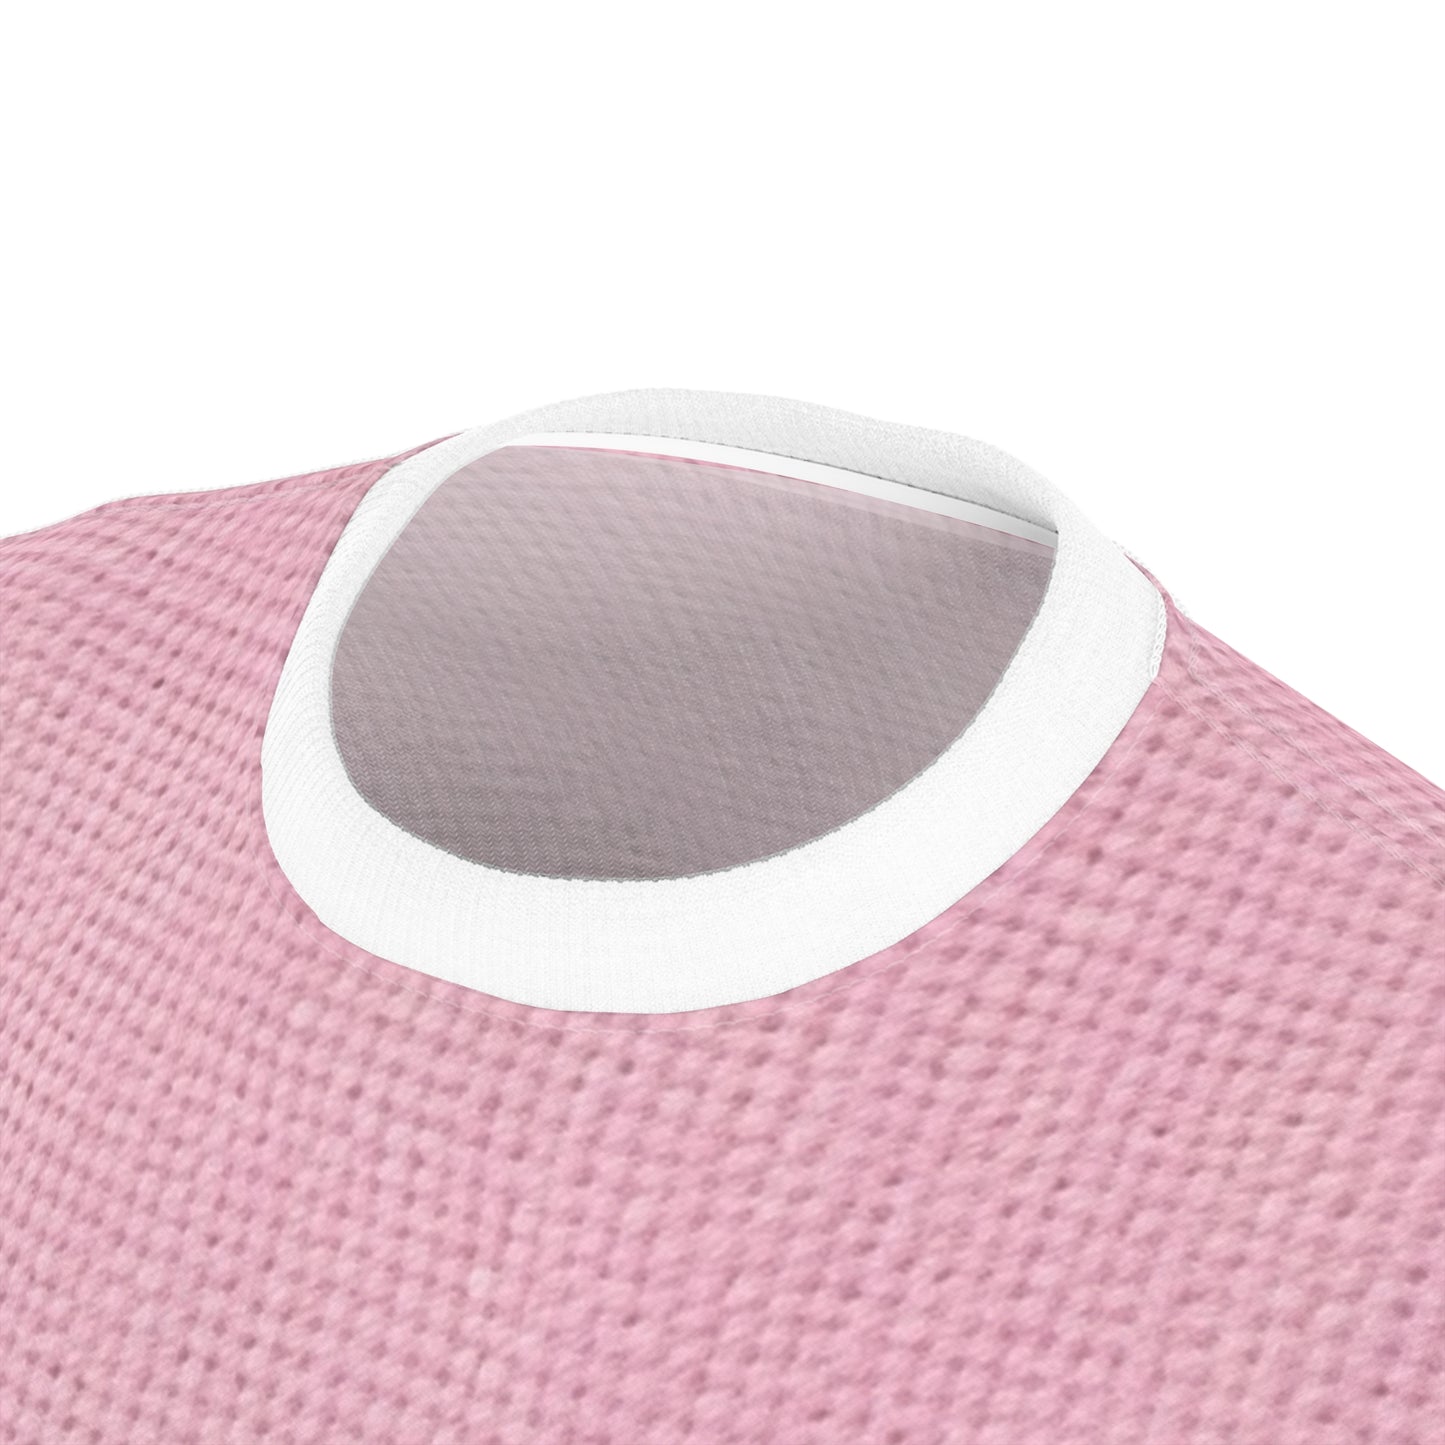 Blushing Garment Dye Pink: Denim-Inspired, Soft-Toned Fabric - Unisex Cut & Sew Tee (AOP)